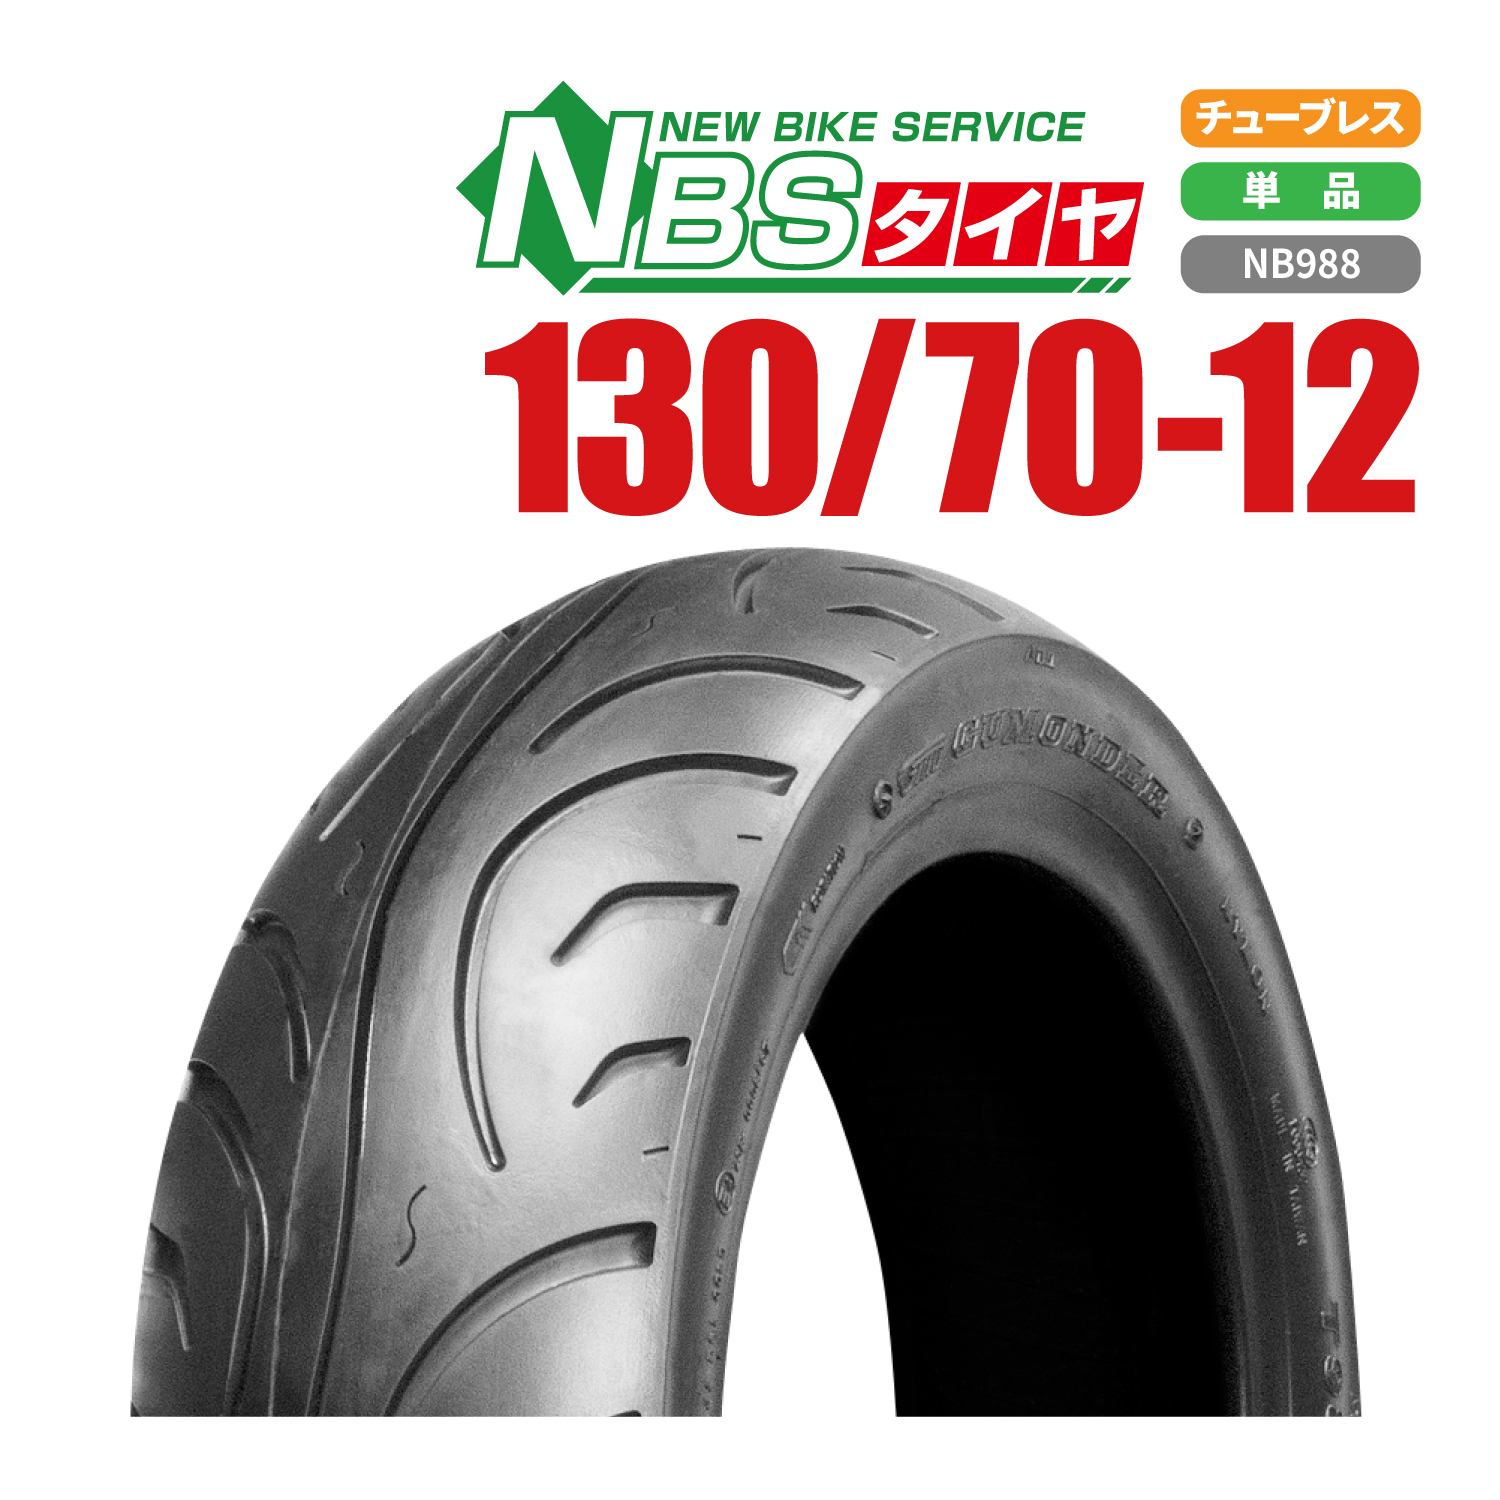  bike tire tire 130/70-12 T/L Majesty 125 250 high quality Taiwan made bike parts center 